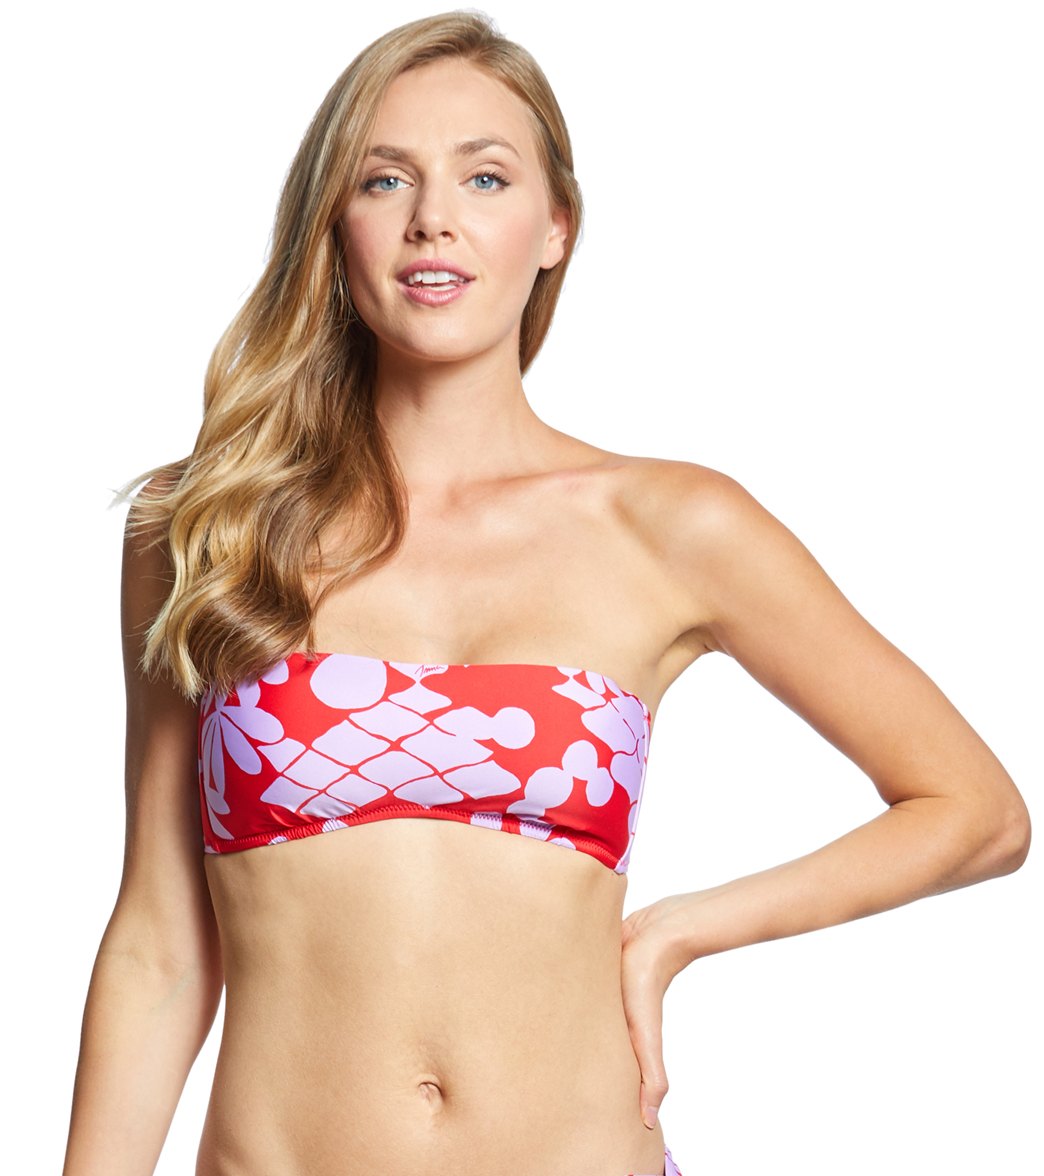 Trina Turk Bali Blossoms Bandeau Bikini Top - Red 10 - Swimoutlet.com